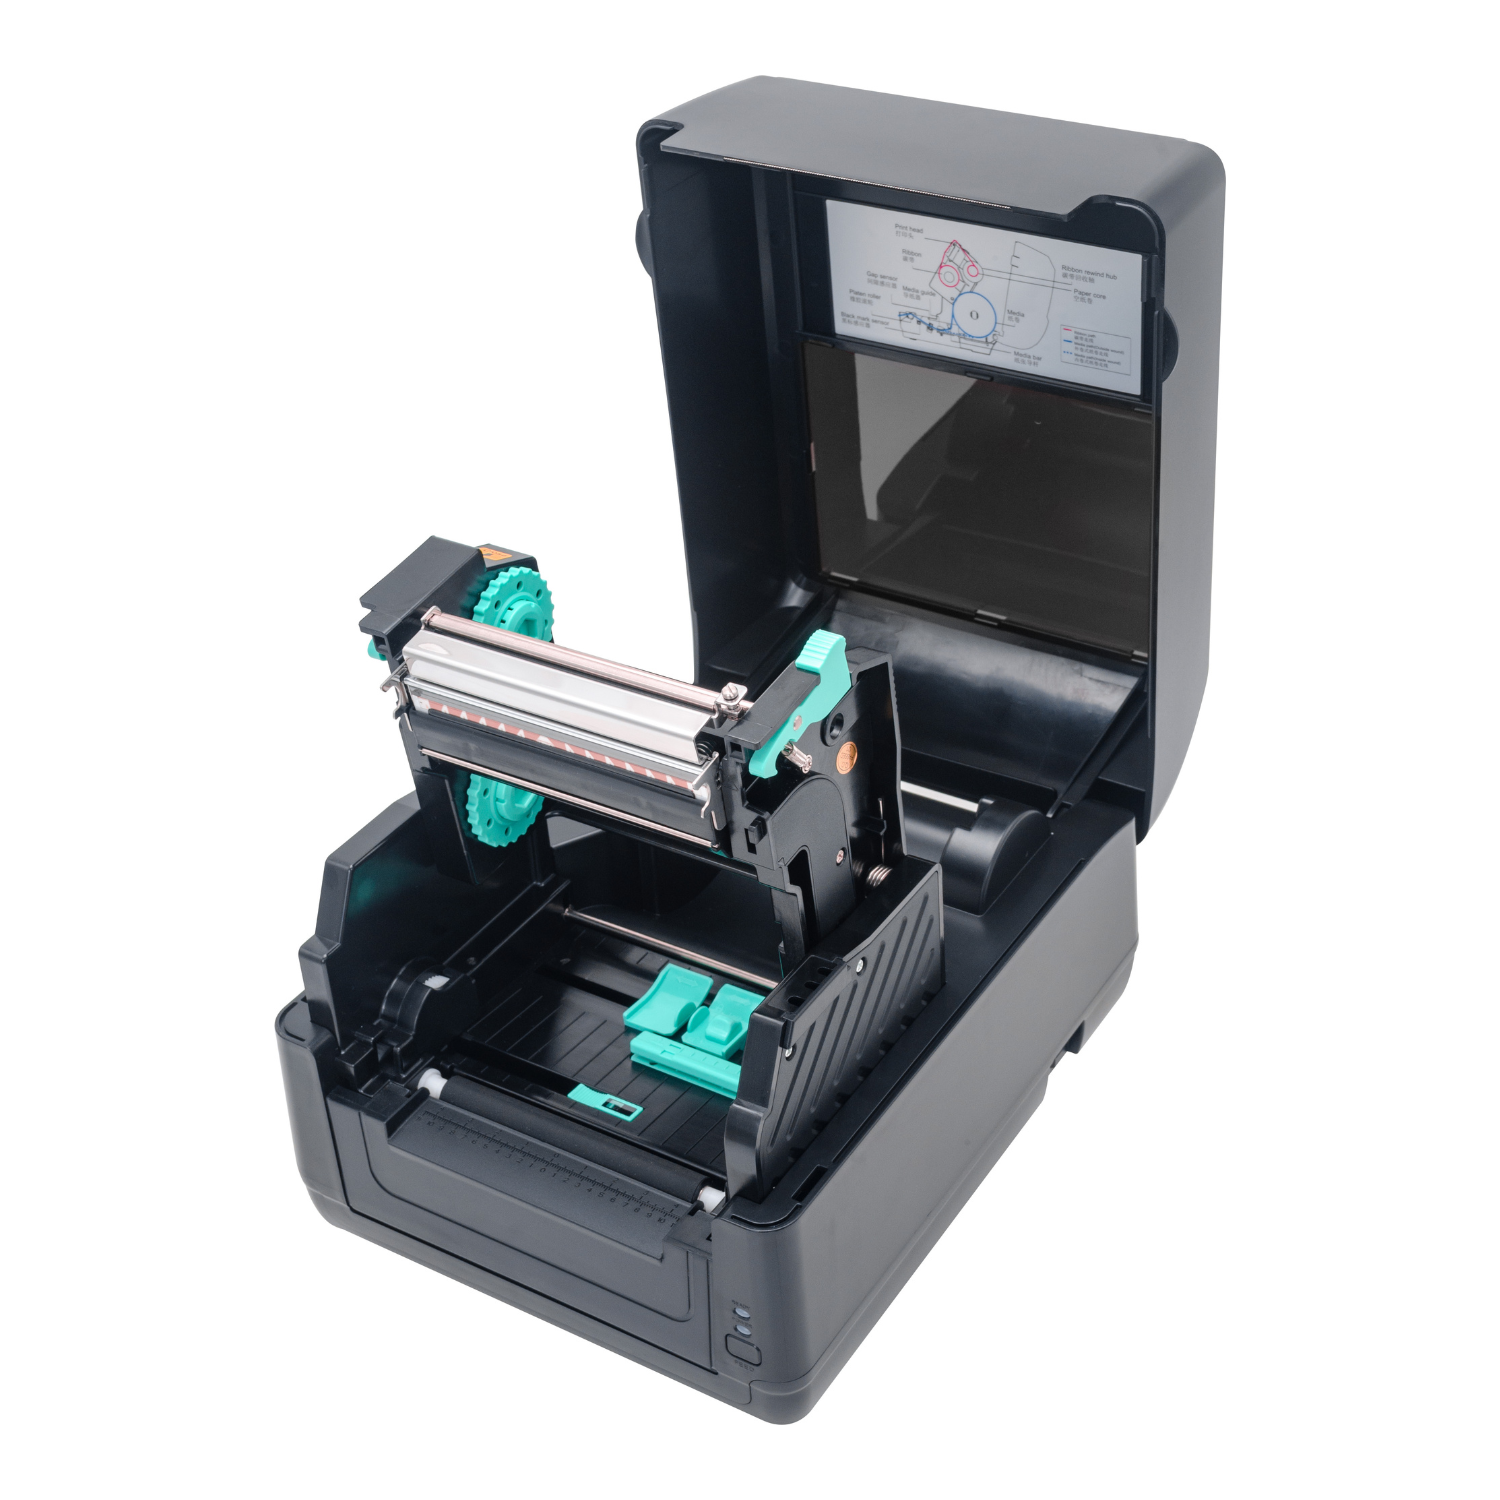 TT20, impresora de etiquetas, impresora térmica de etiquetas, impressora de etiquetas, label thermal printer, label printer